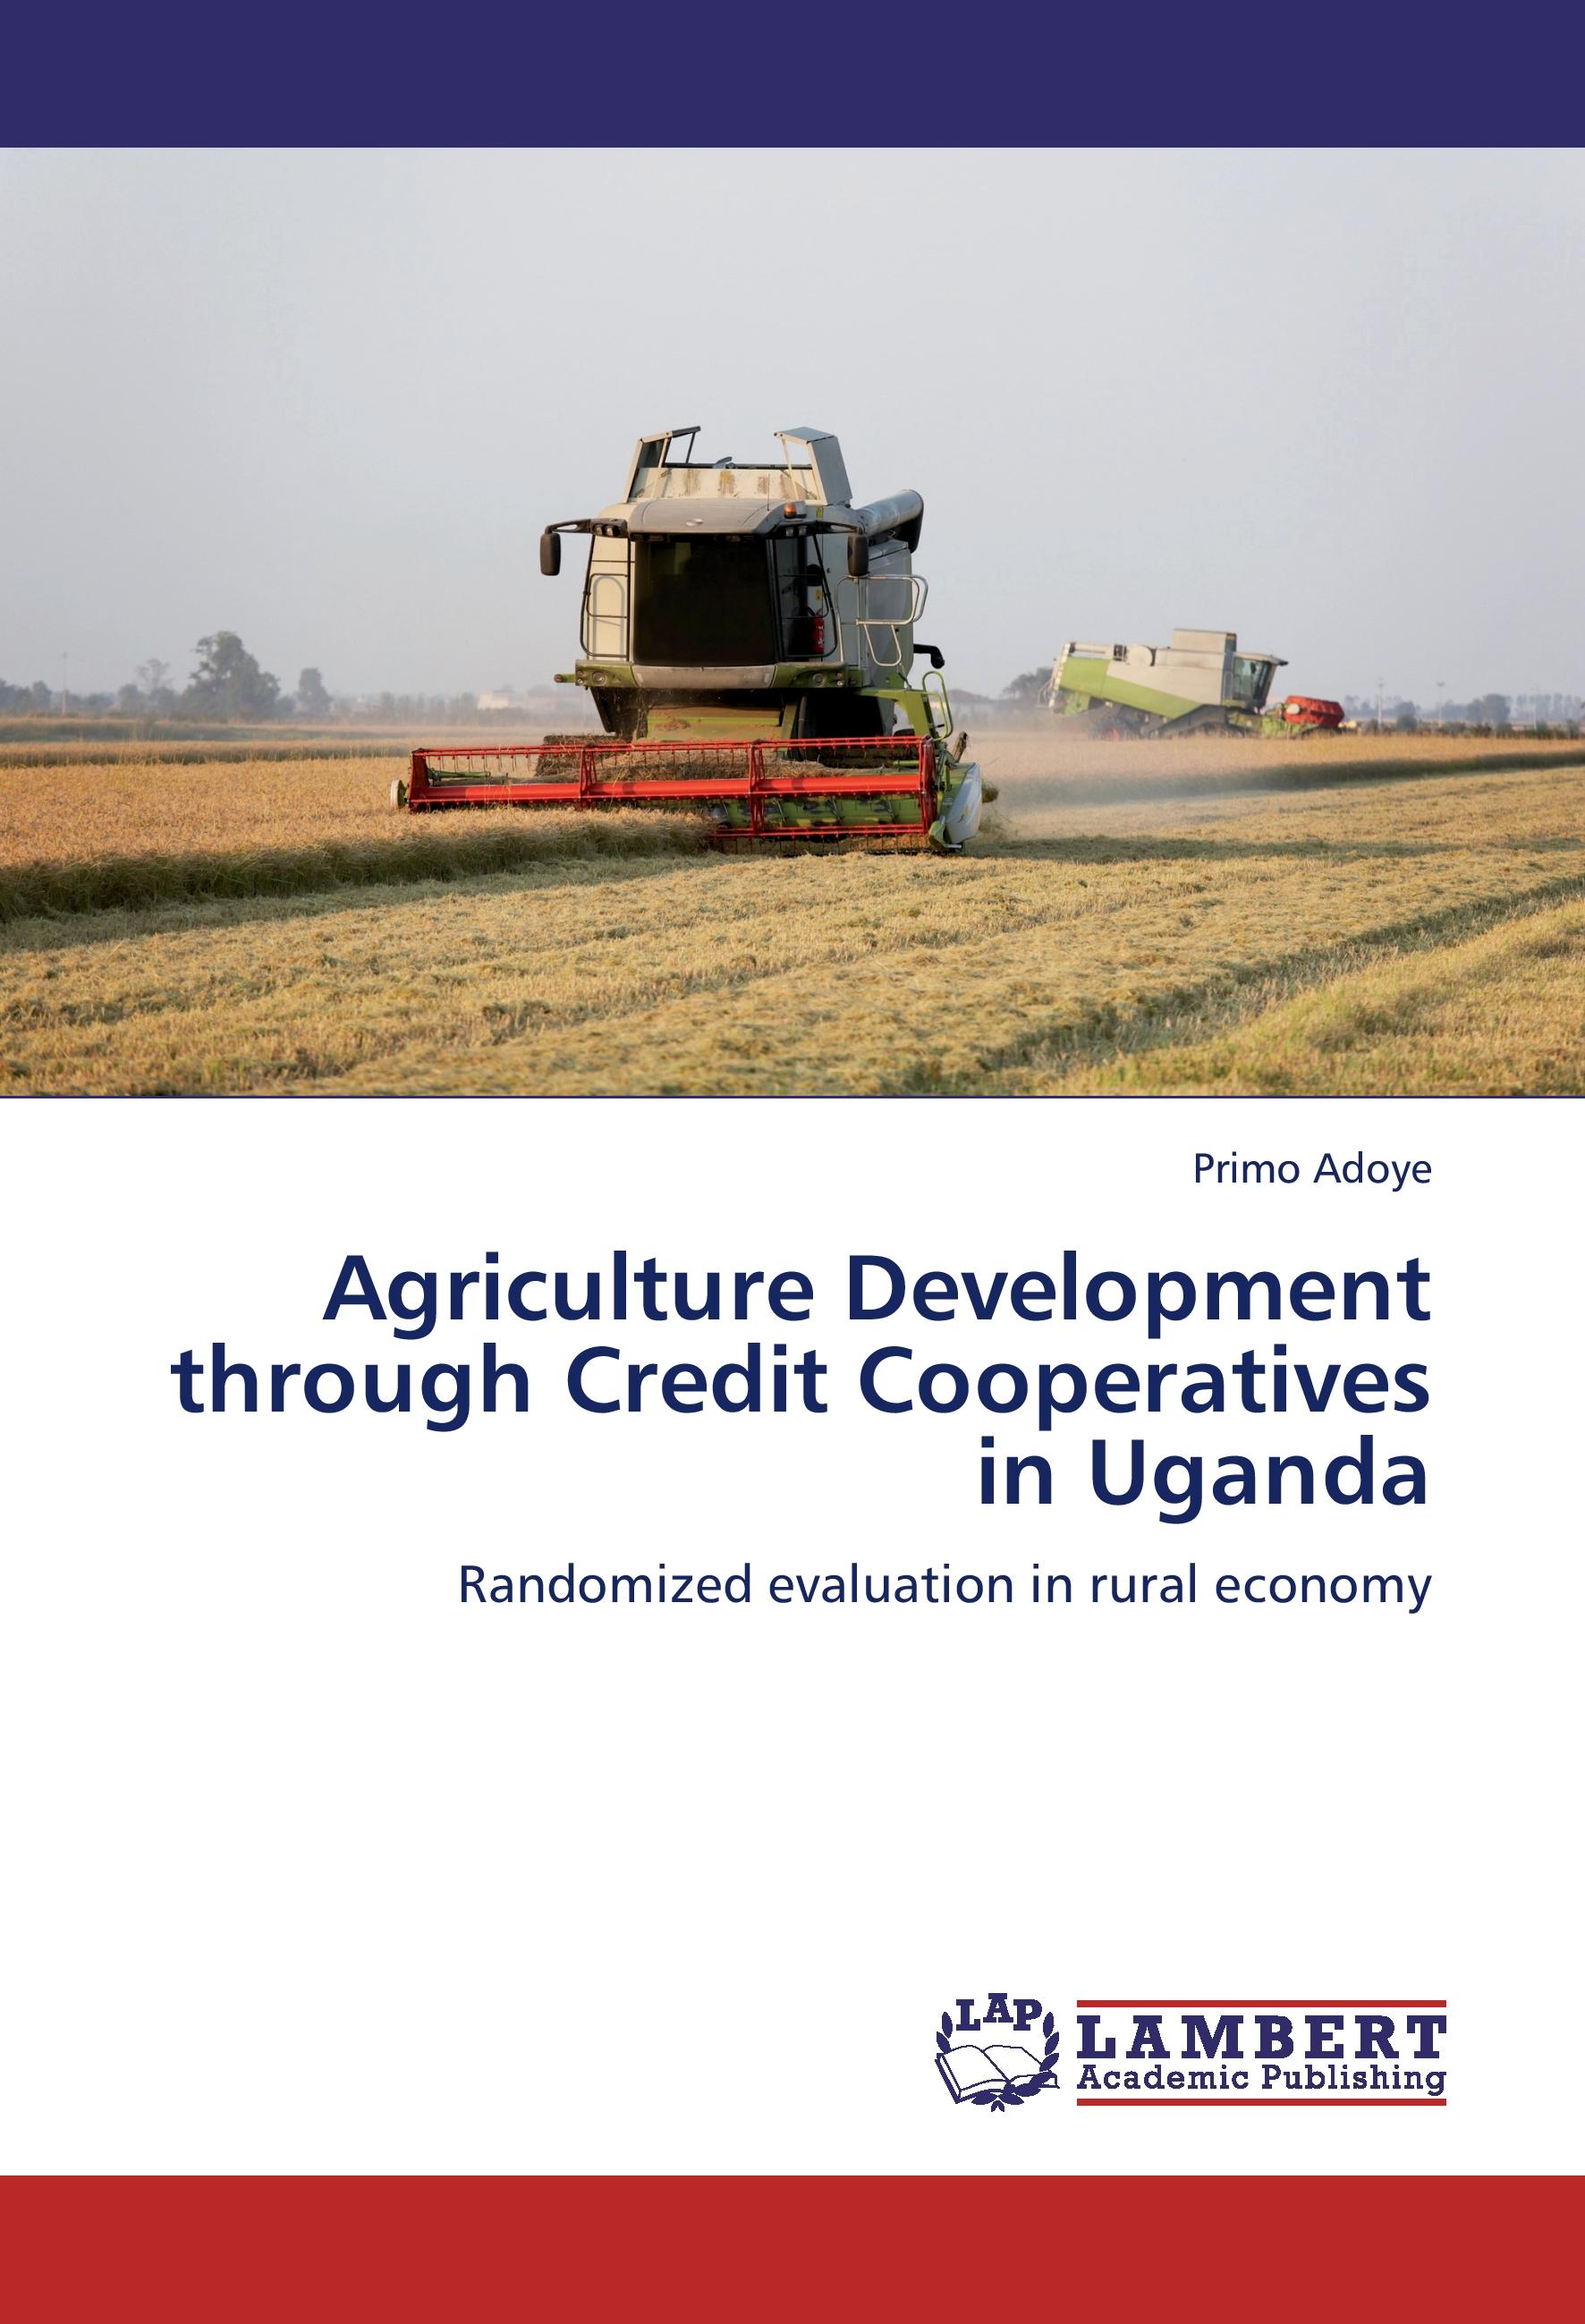 Agriculture Development through Credit Cooperatives in Uganda - Adoye, Primo